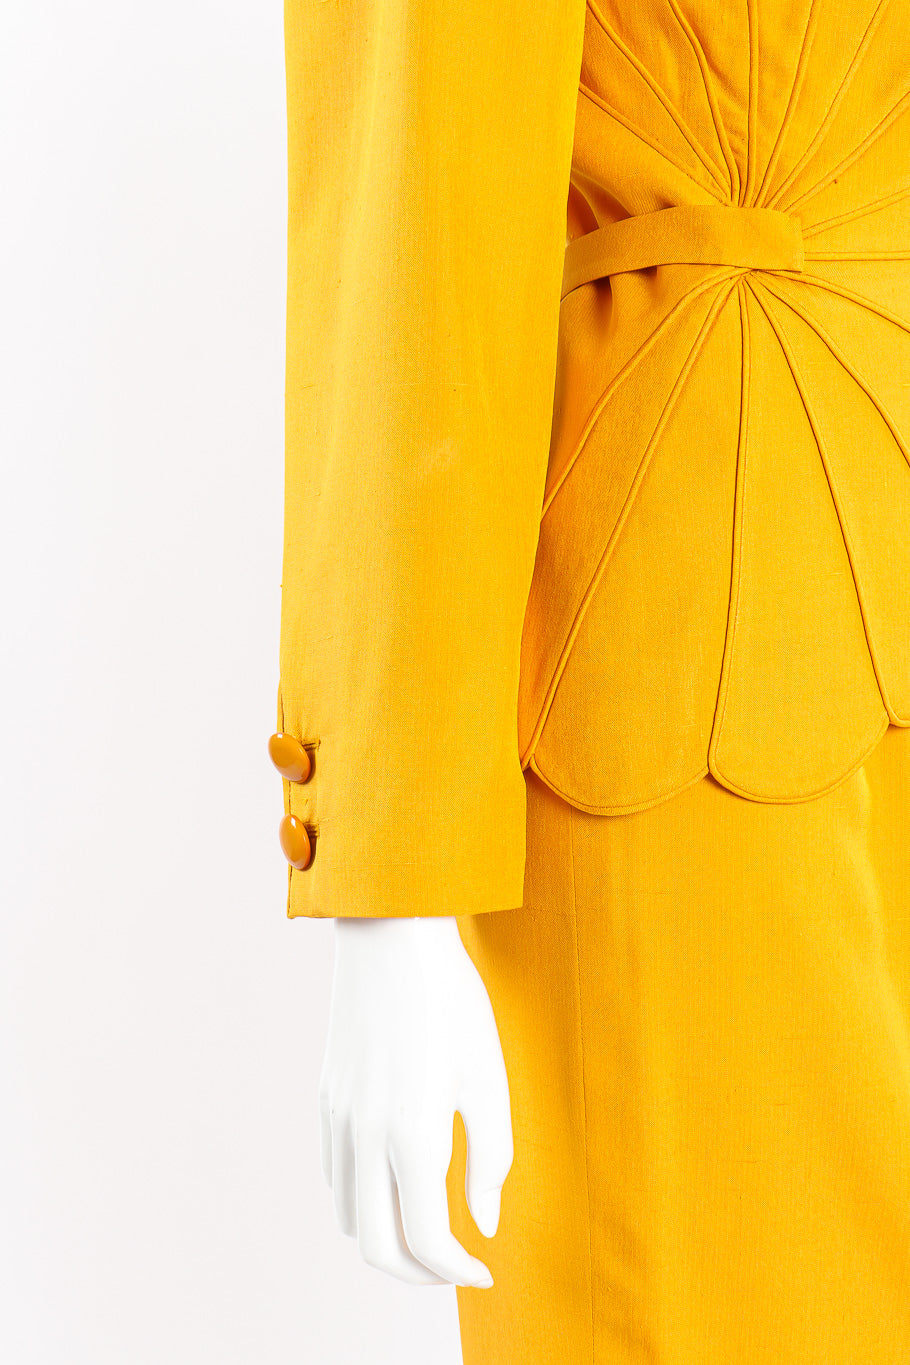 Valentino Boutique shell pattern jacket and skirt set jacket details @recessla